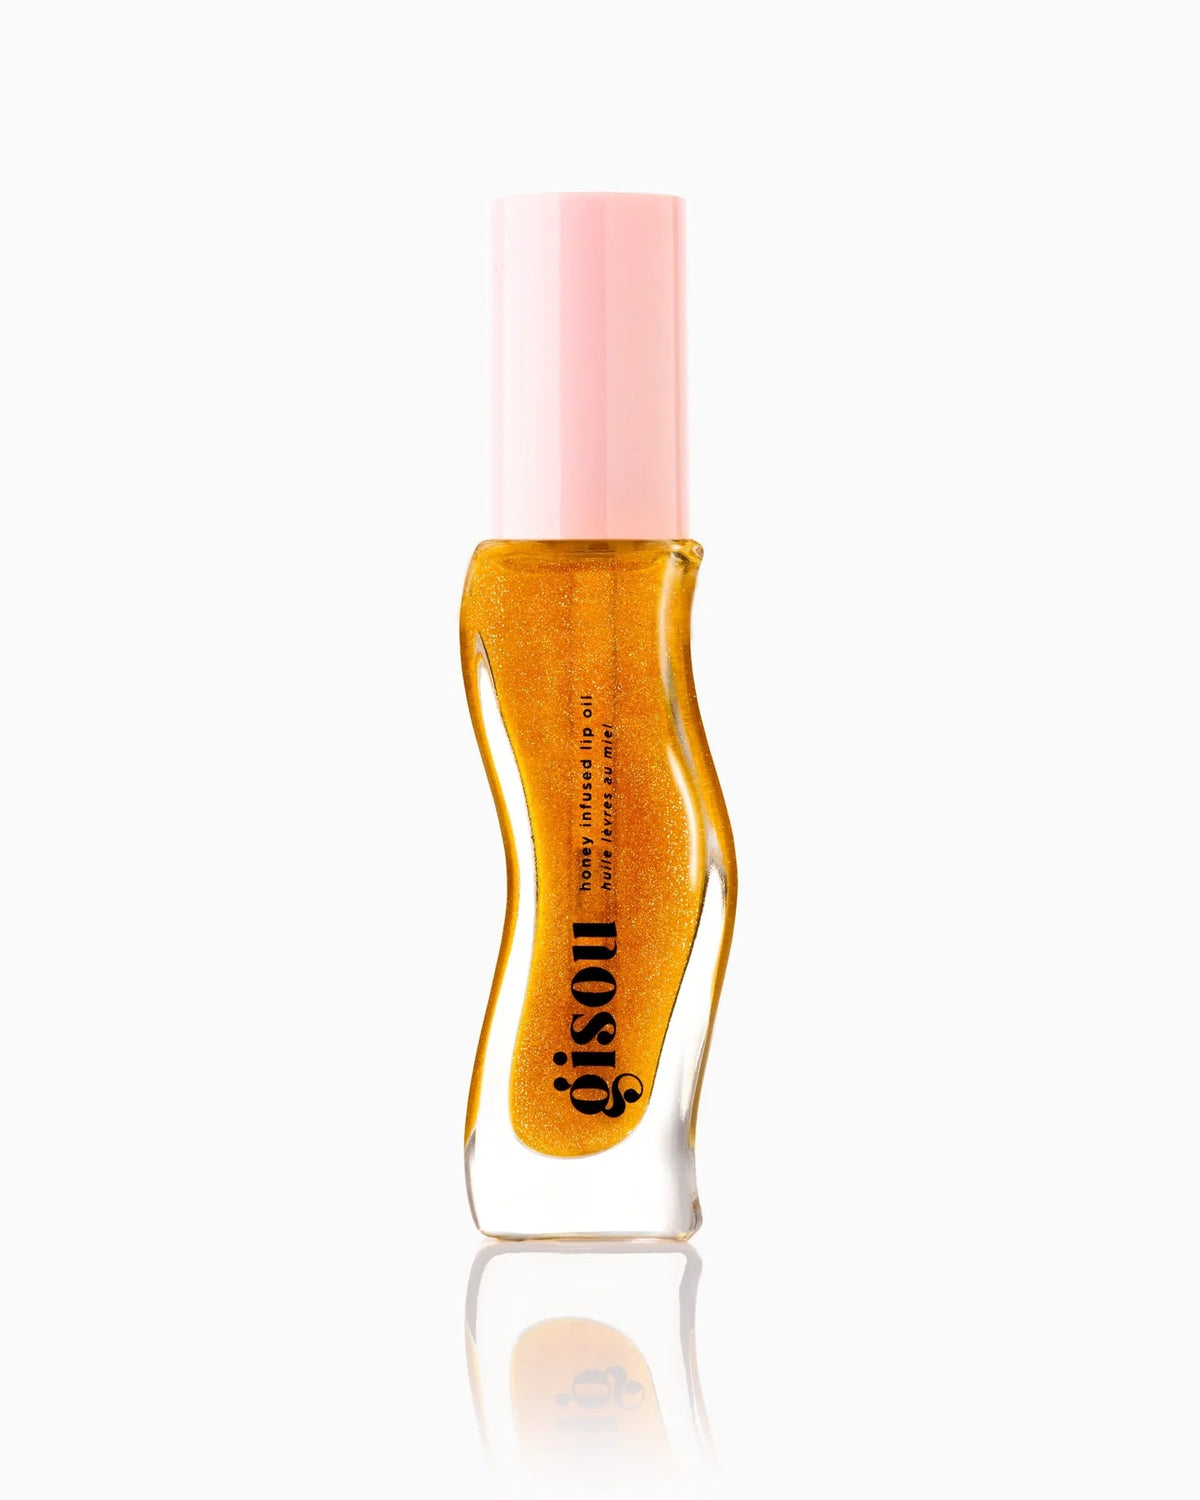 Honey infused lip oil